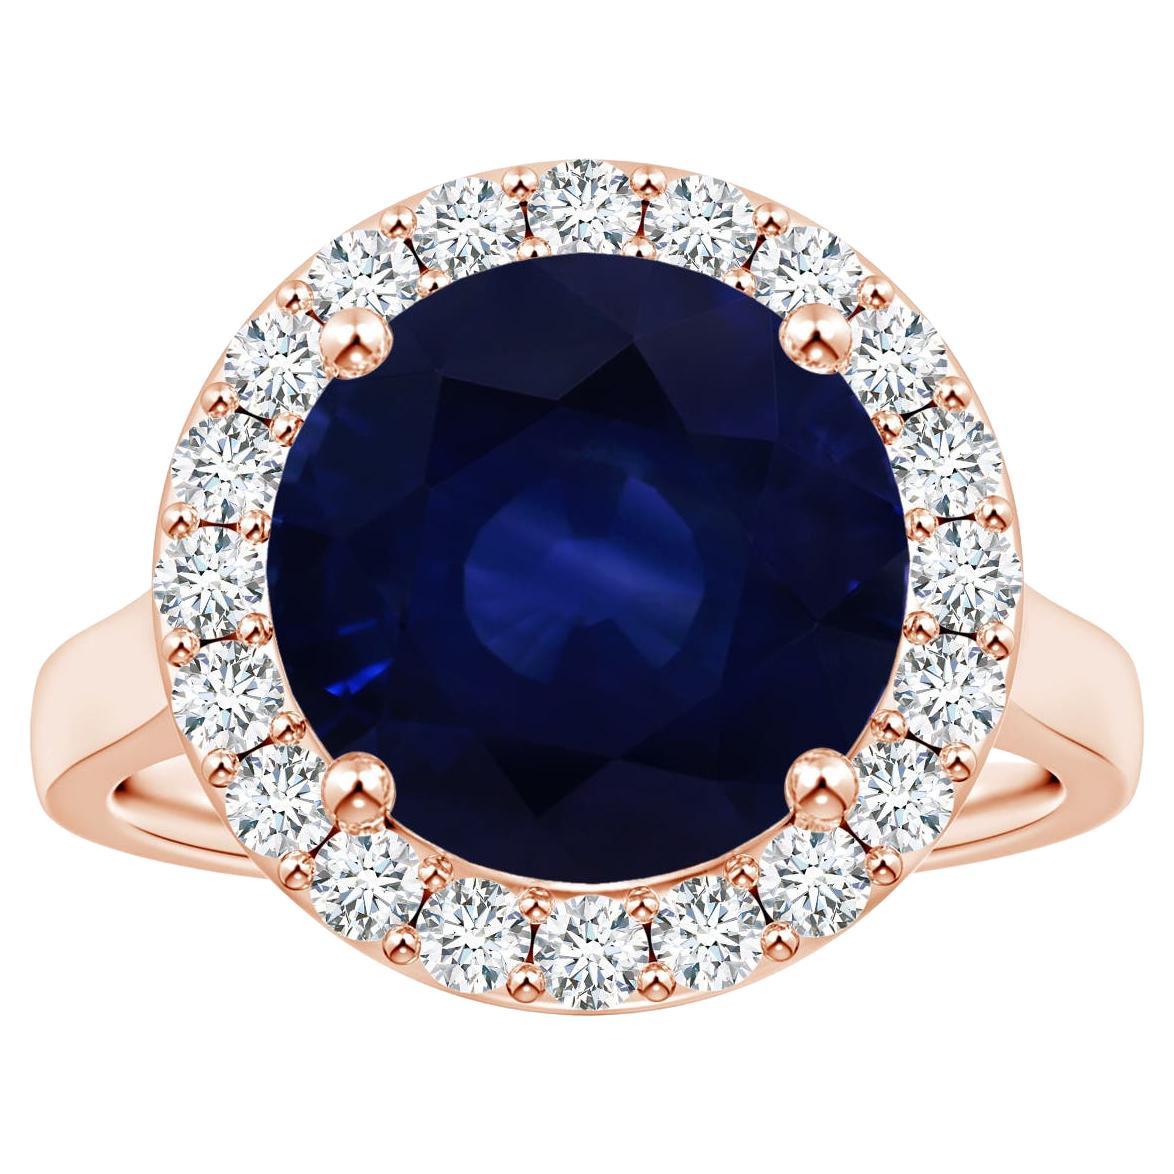 En vente :  ANGARA Bague en or rose avec saphir bleu naturel certifié GIA de 6,63 carats et diamants